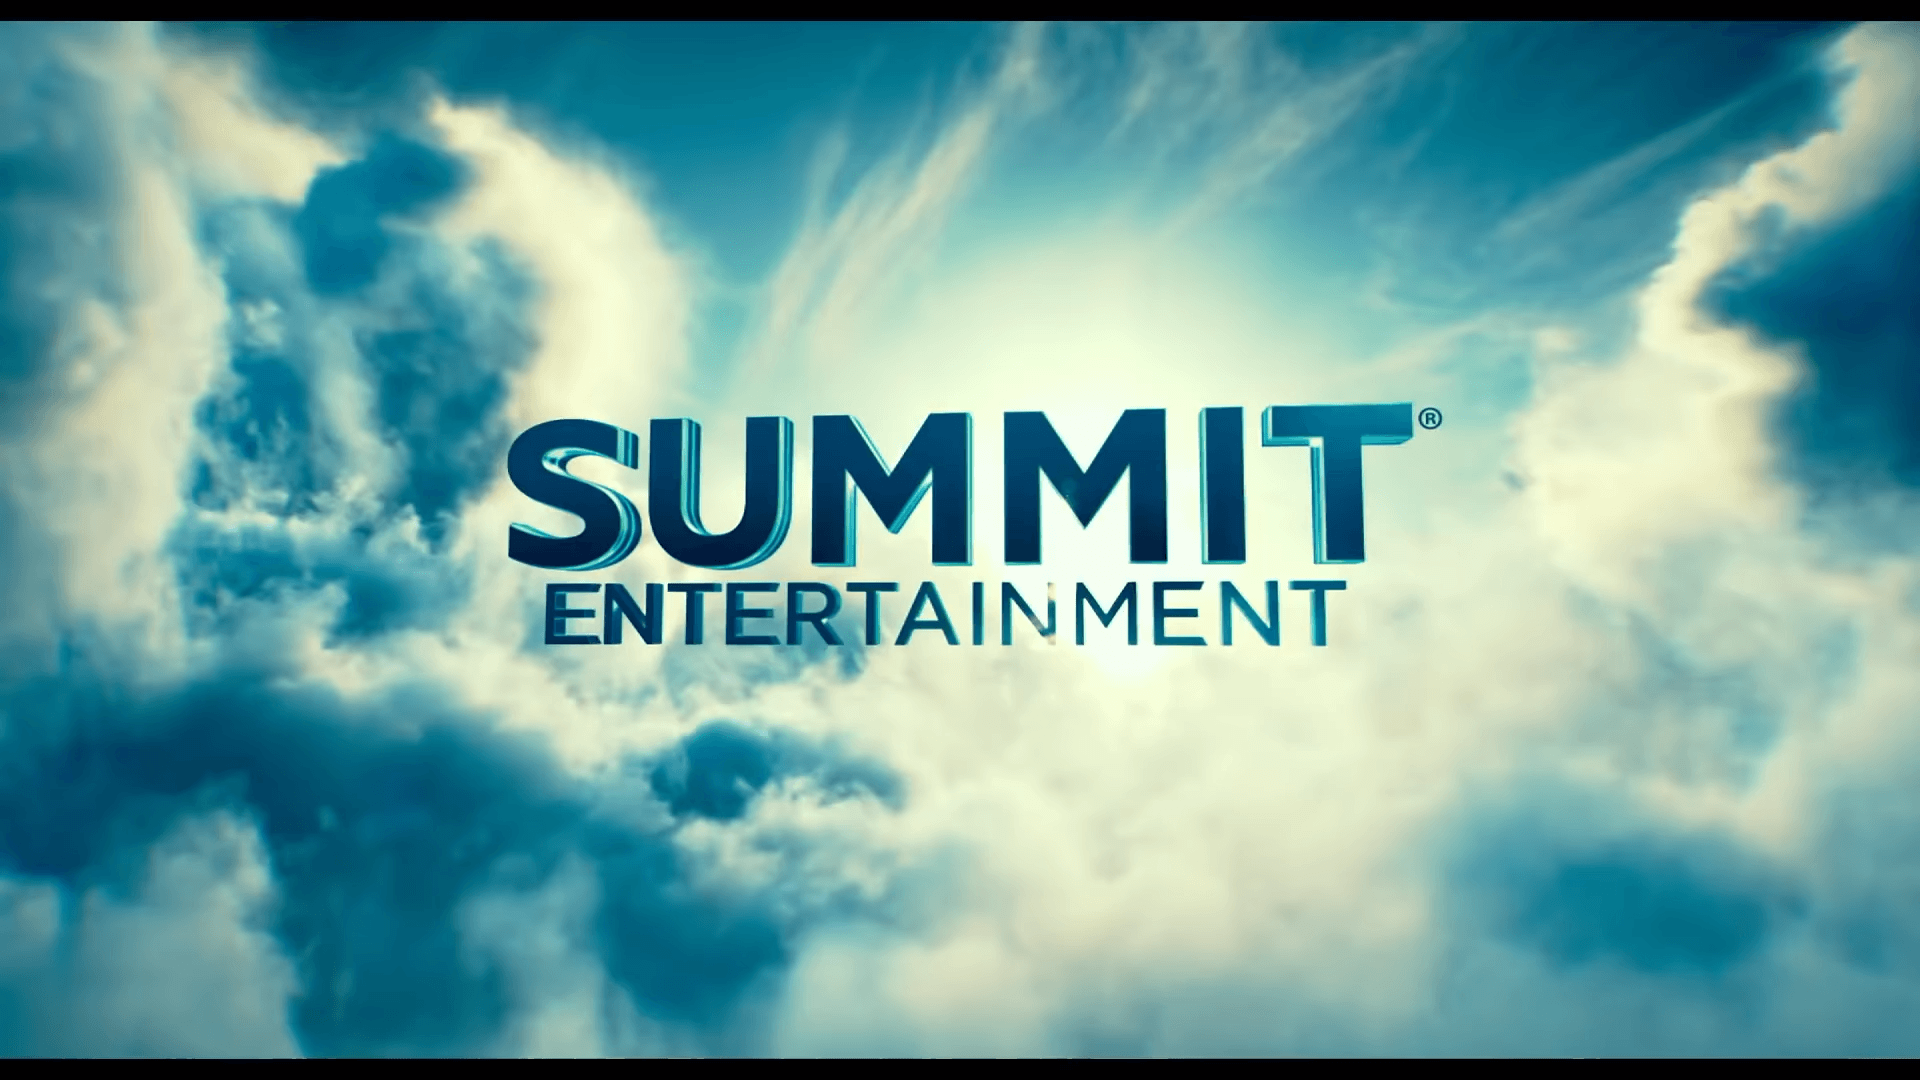 Summit Entertainment Logo - Image - Summit Entertainment (2018).png | Logopedia | FANDOM powered ...